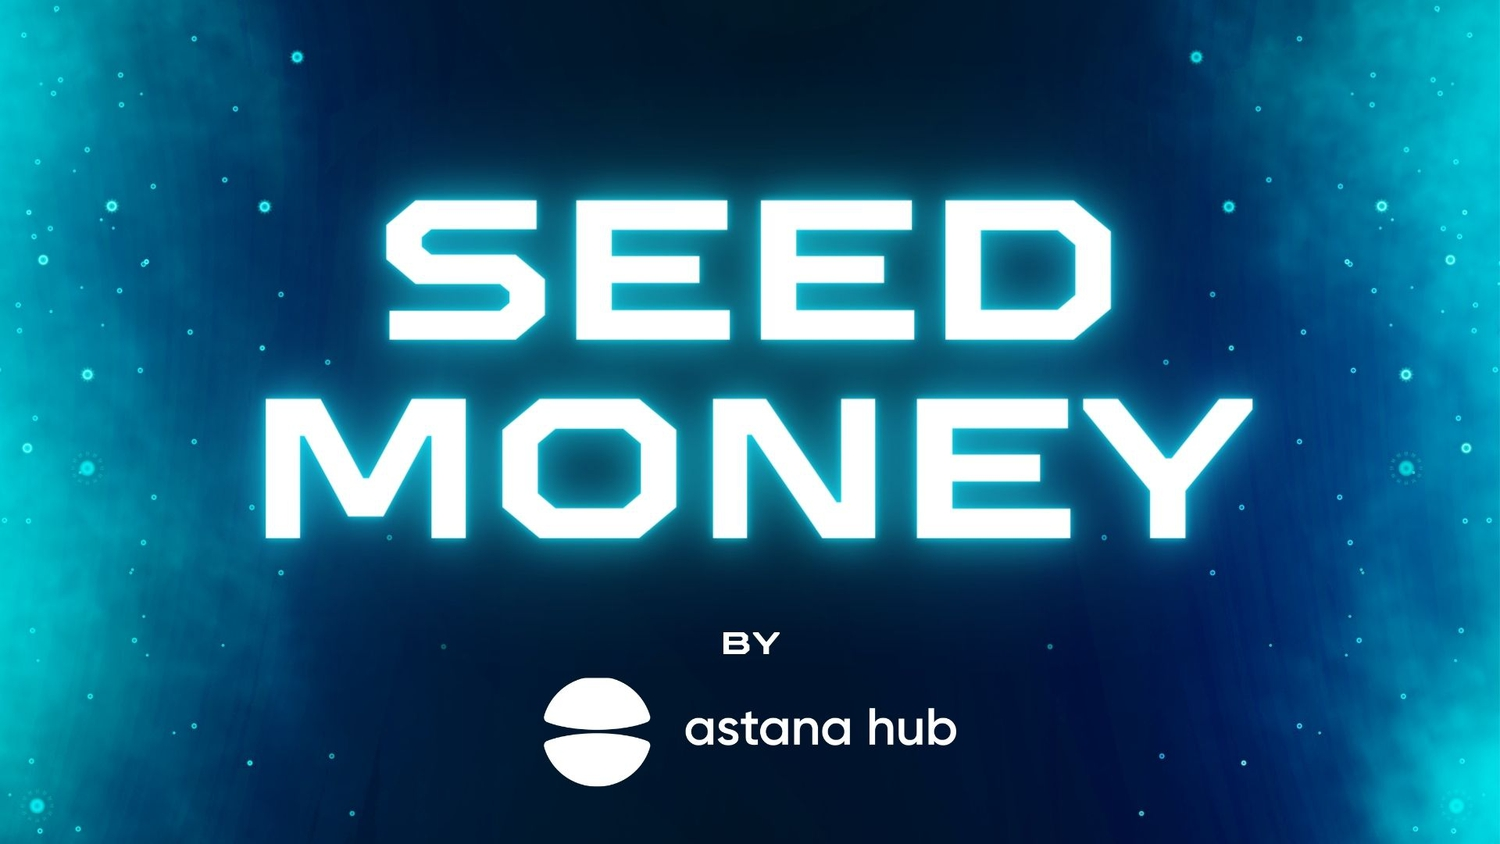 Announcing the Chosen: Astana Hub's Seed Money 4.1 Program Funds Nine Innovative Startups